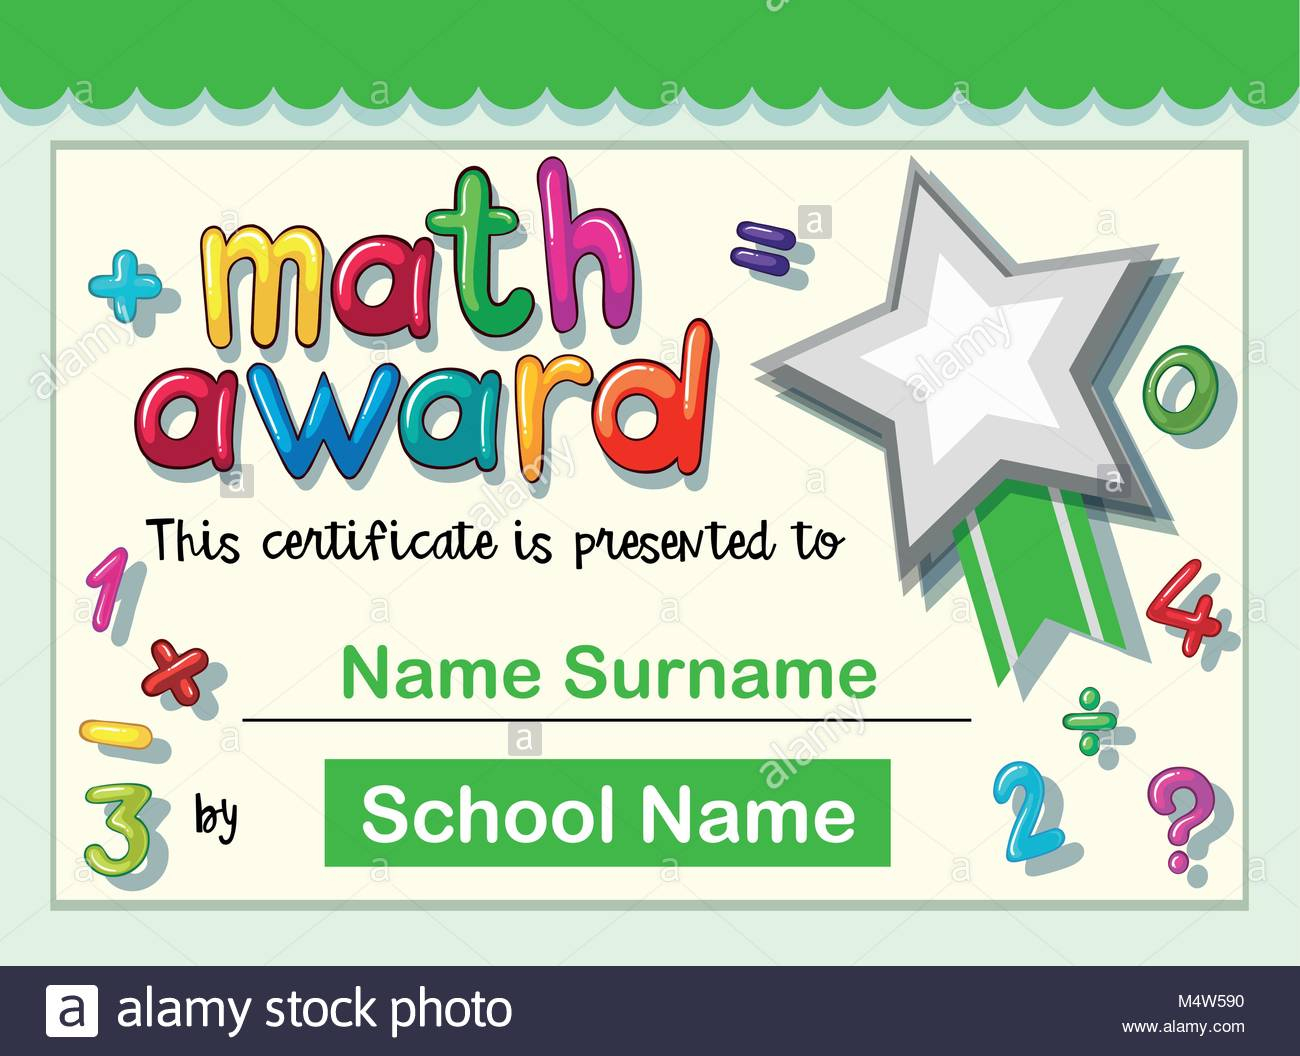 Certificate Template For Math Award Illustration Stock With Math Certificate Template